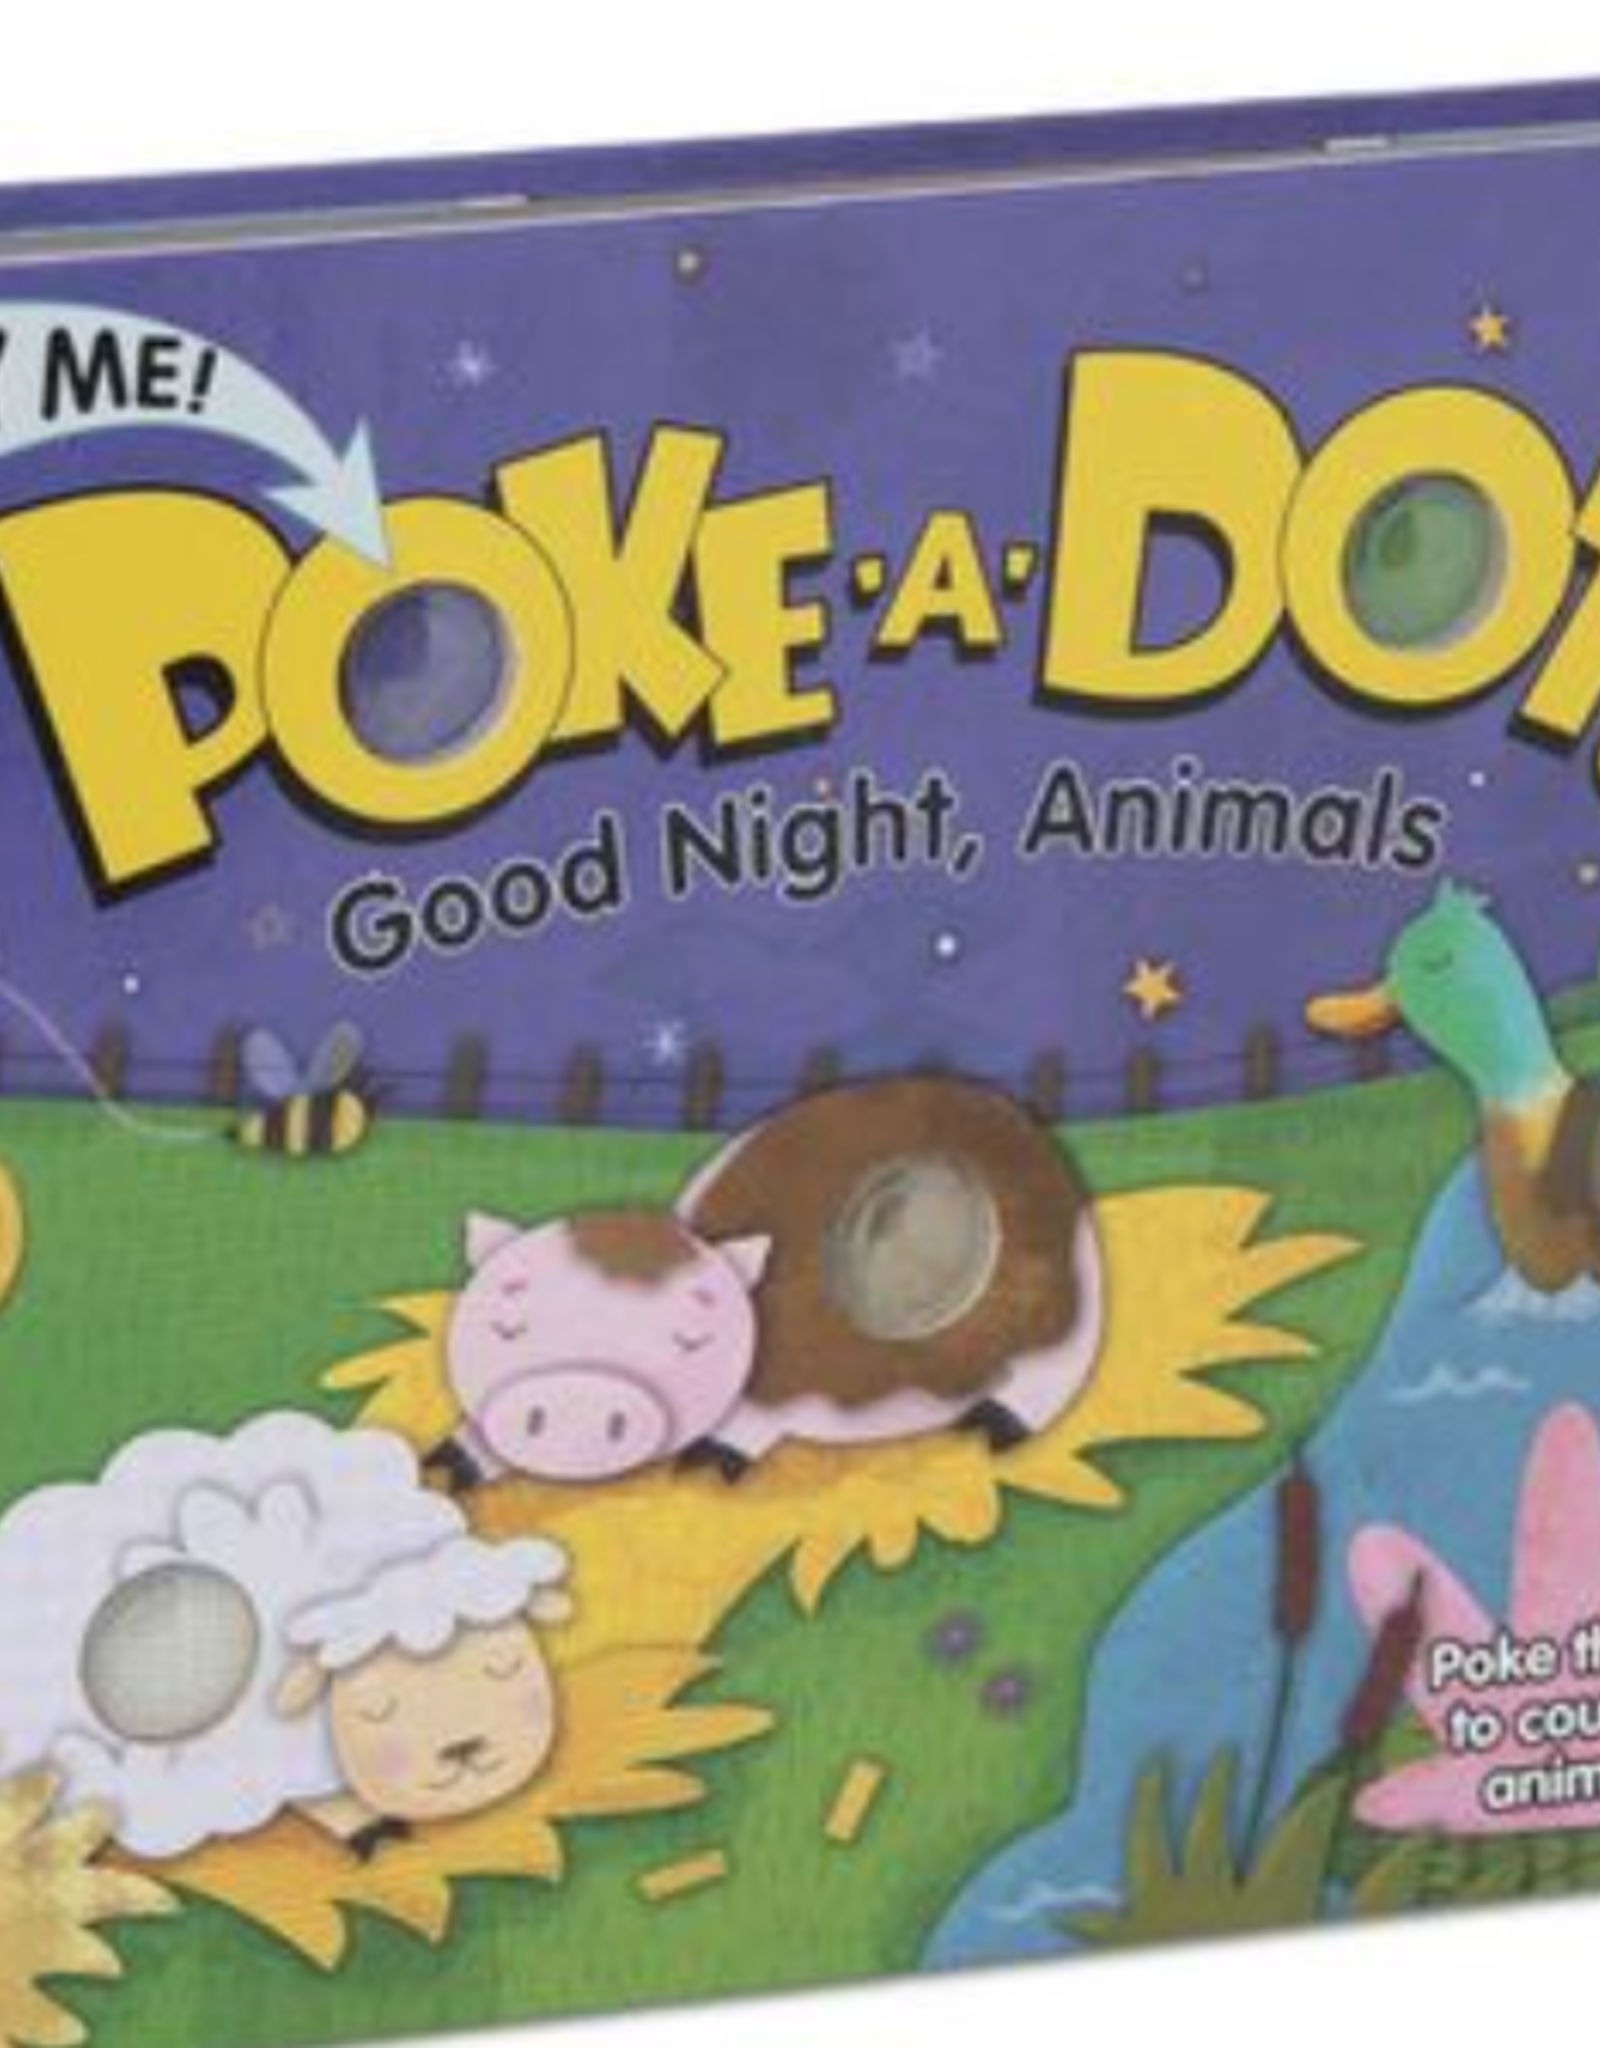 Kids Melissa & Doug: Poke-A-Dot Goodnight Animals